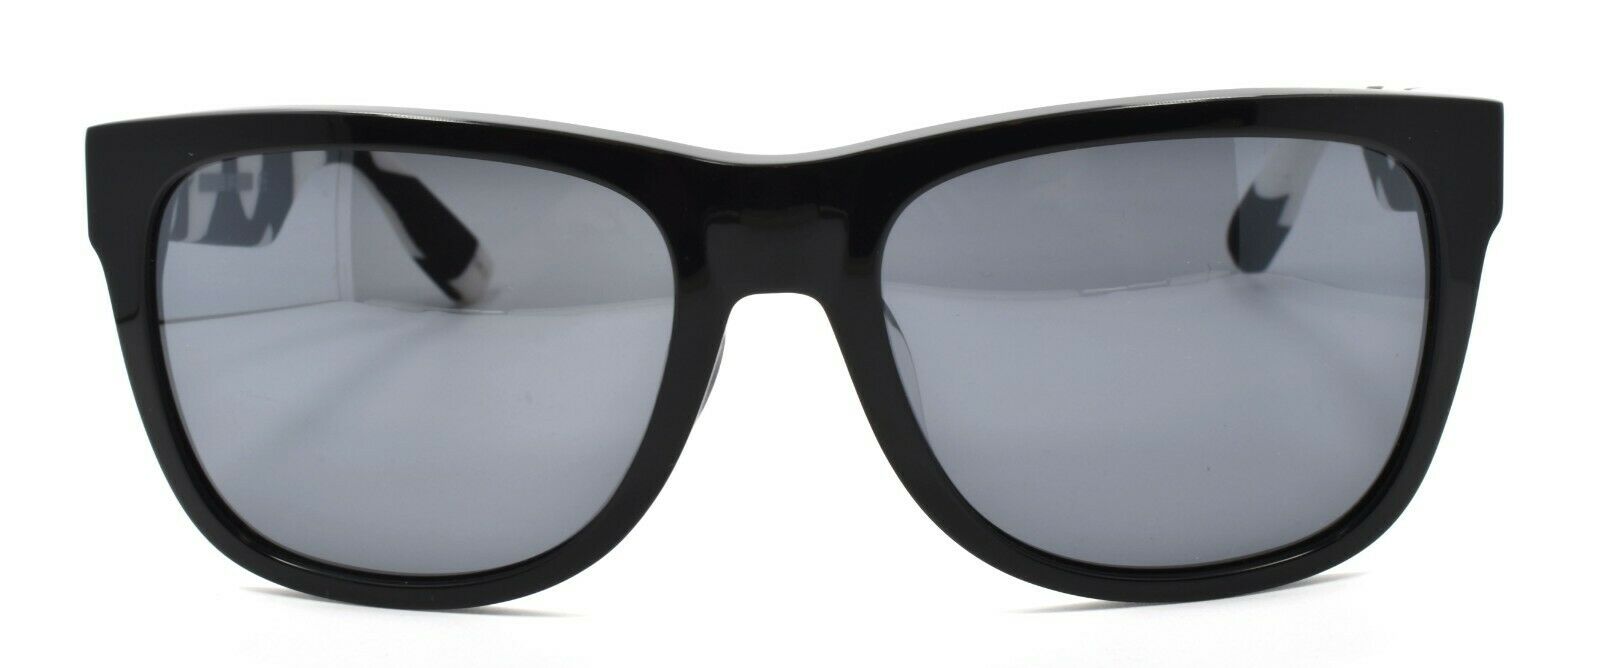 2-McQ Alexander McQueen MQ0018SA 008 Women's Sunglasses Black & White / Gray-889652030289-IKSpecs